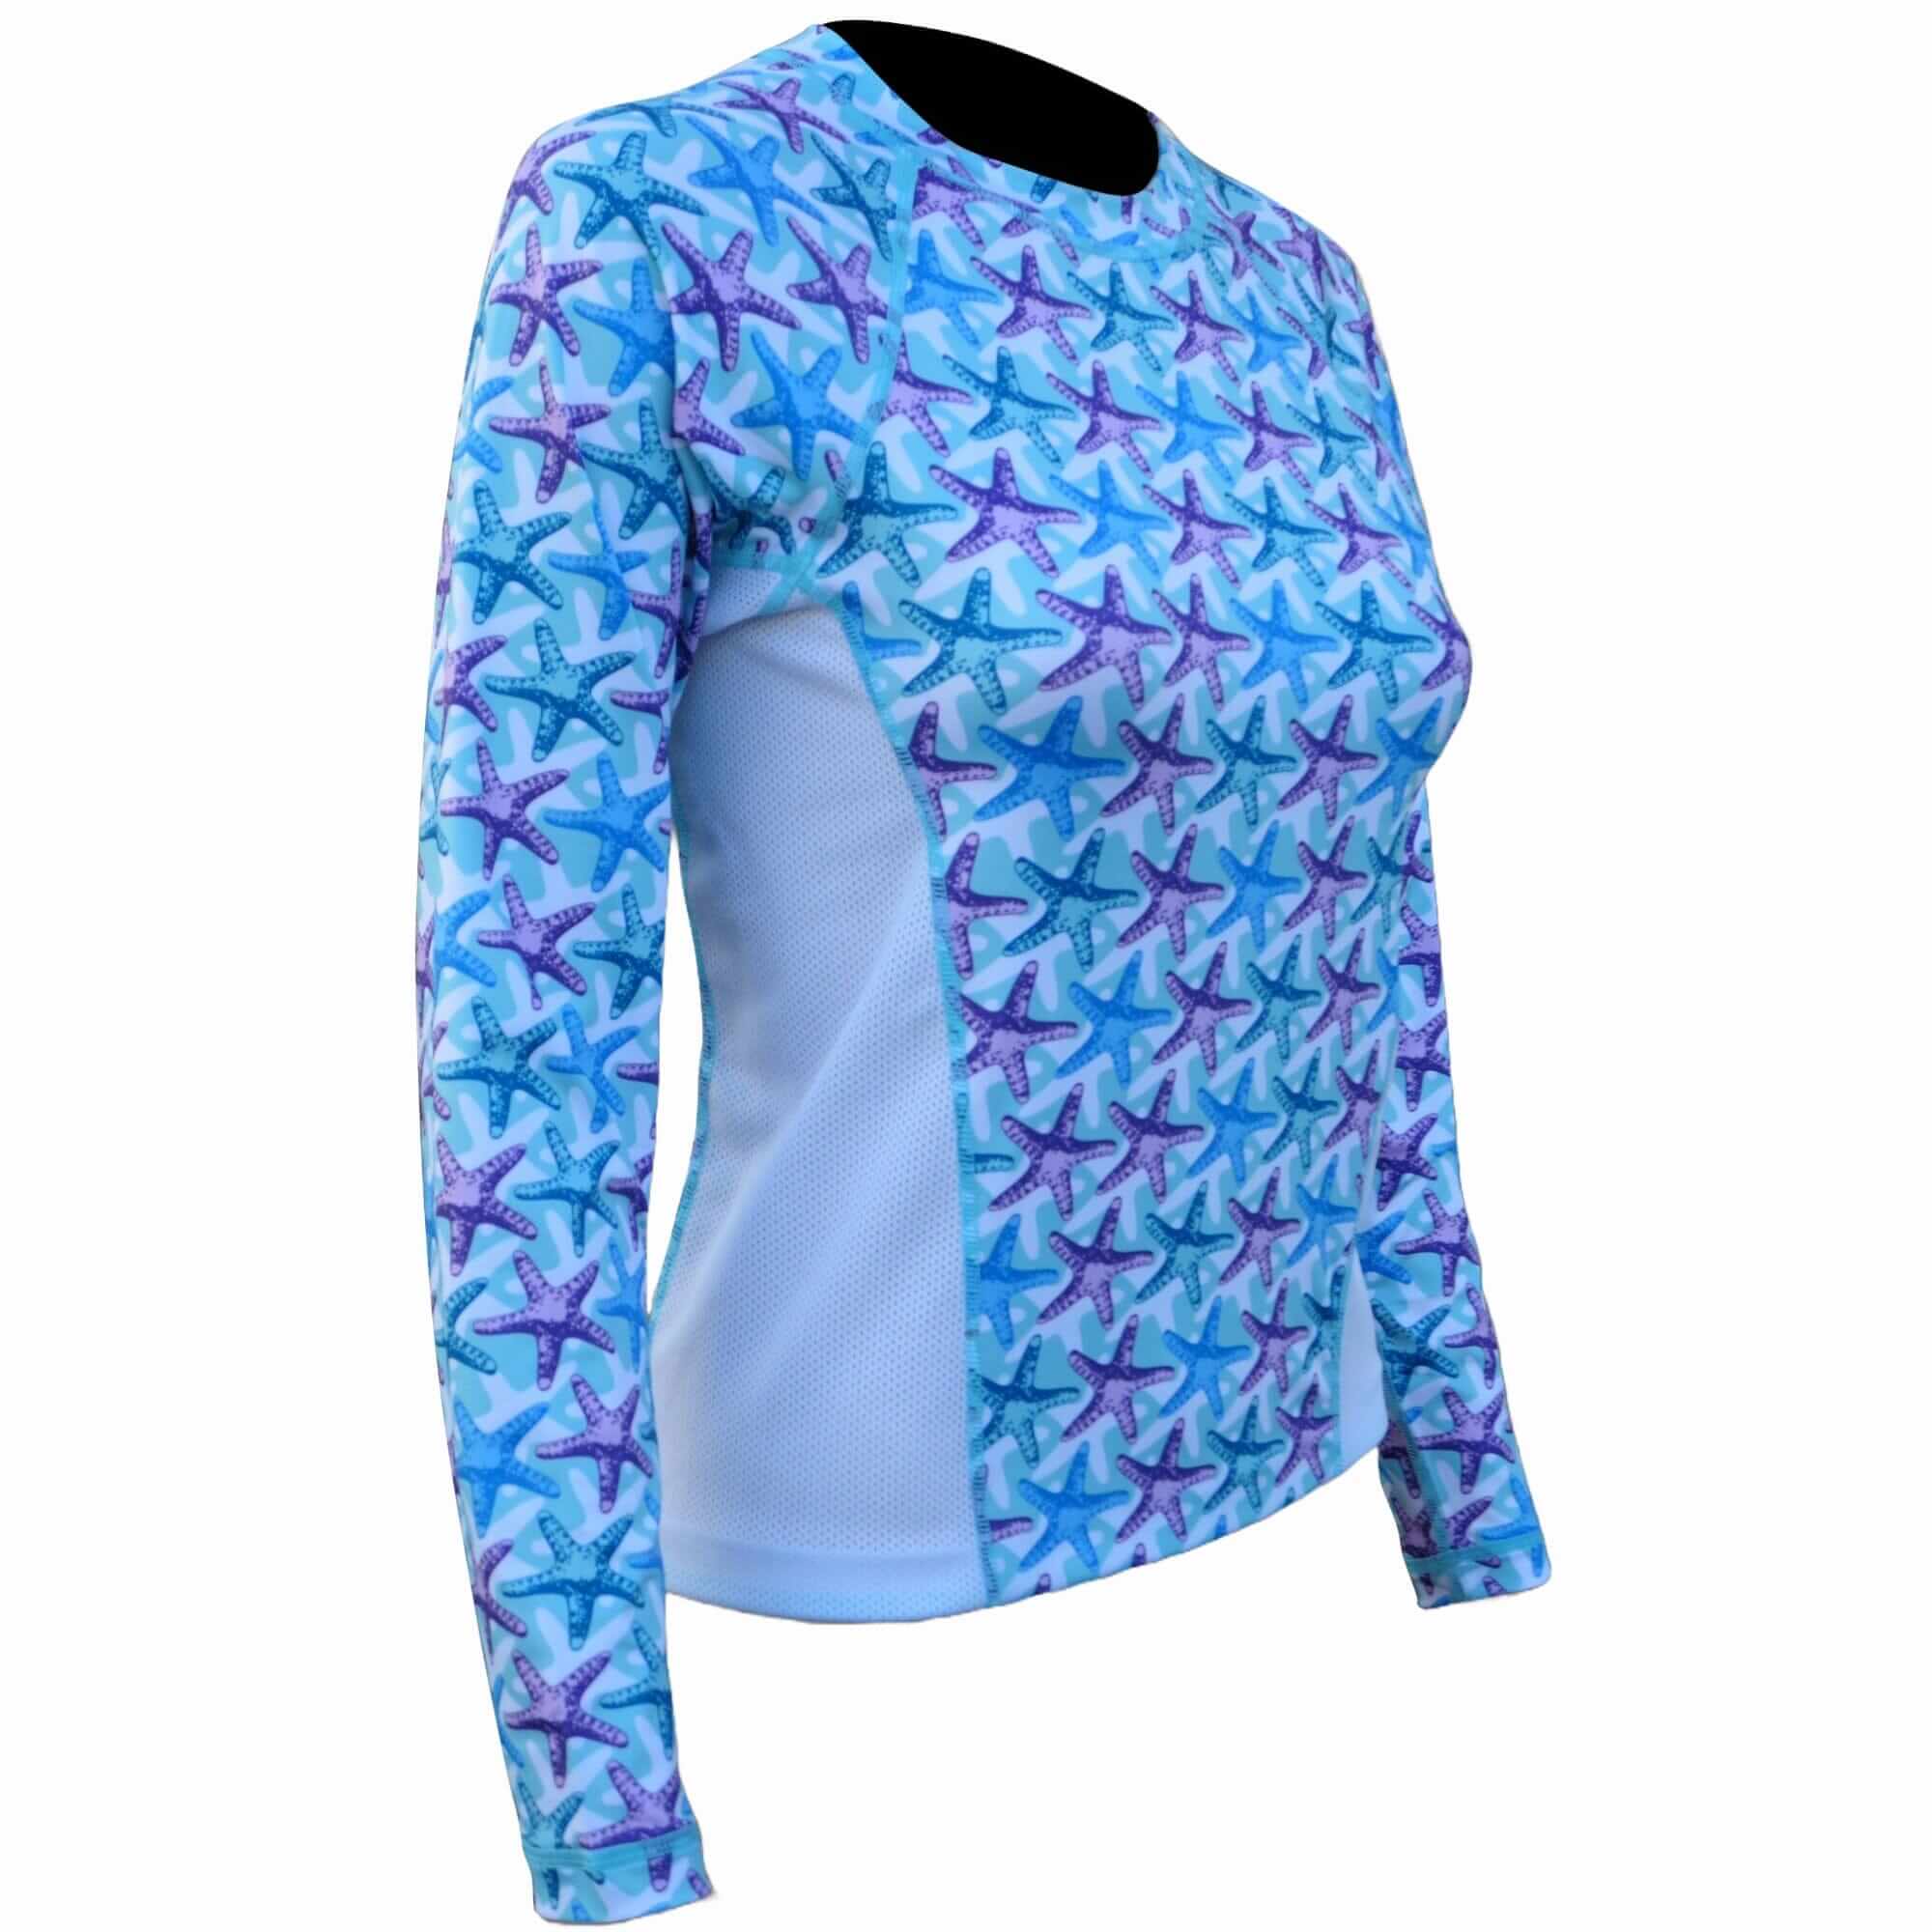 Ladies SPF-50 Performance Shirt - Starfish - Sale, Xxs